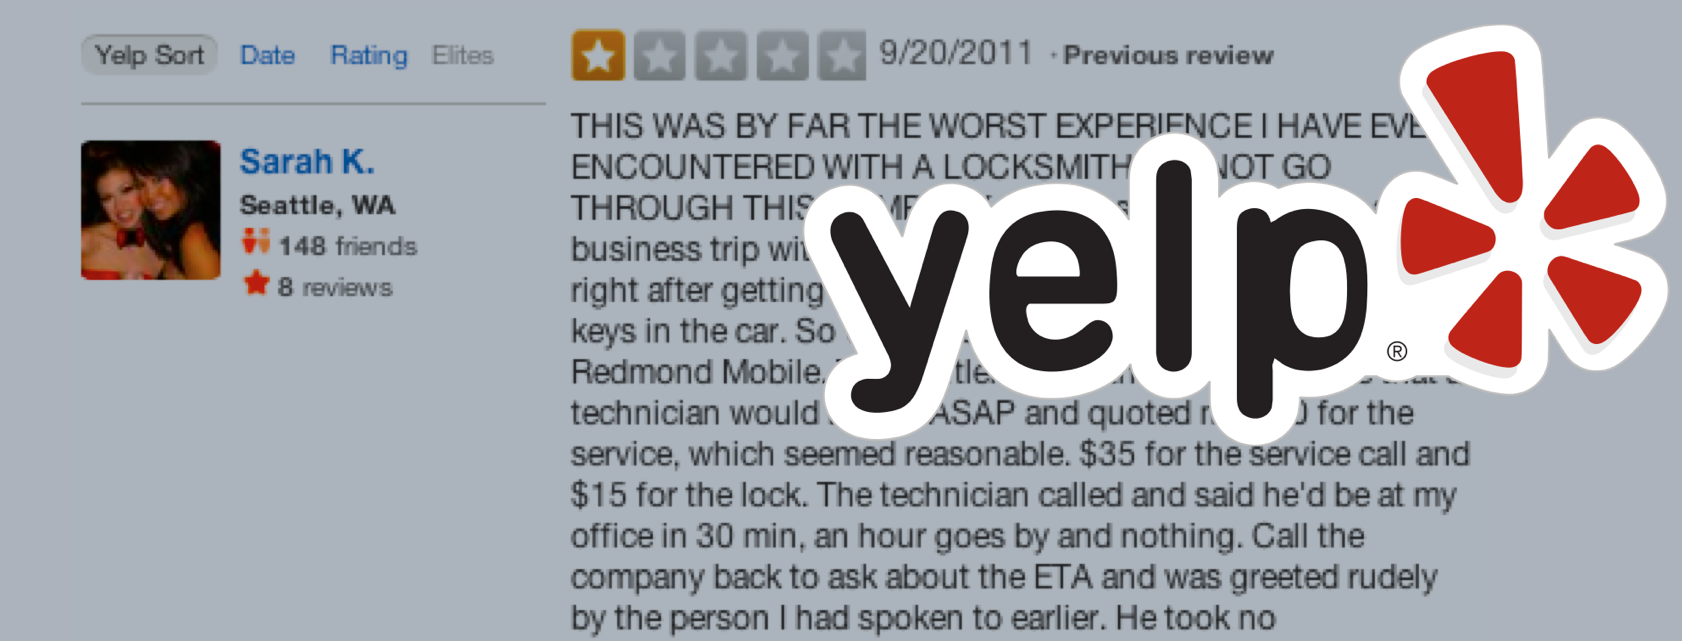 signpost reviews yelp